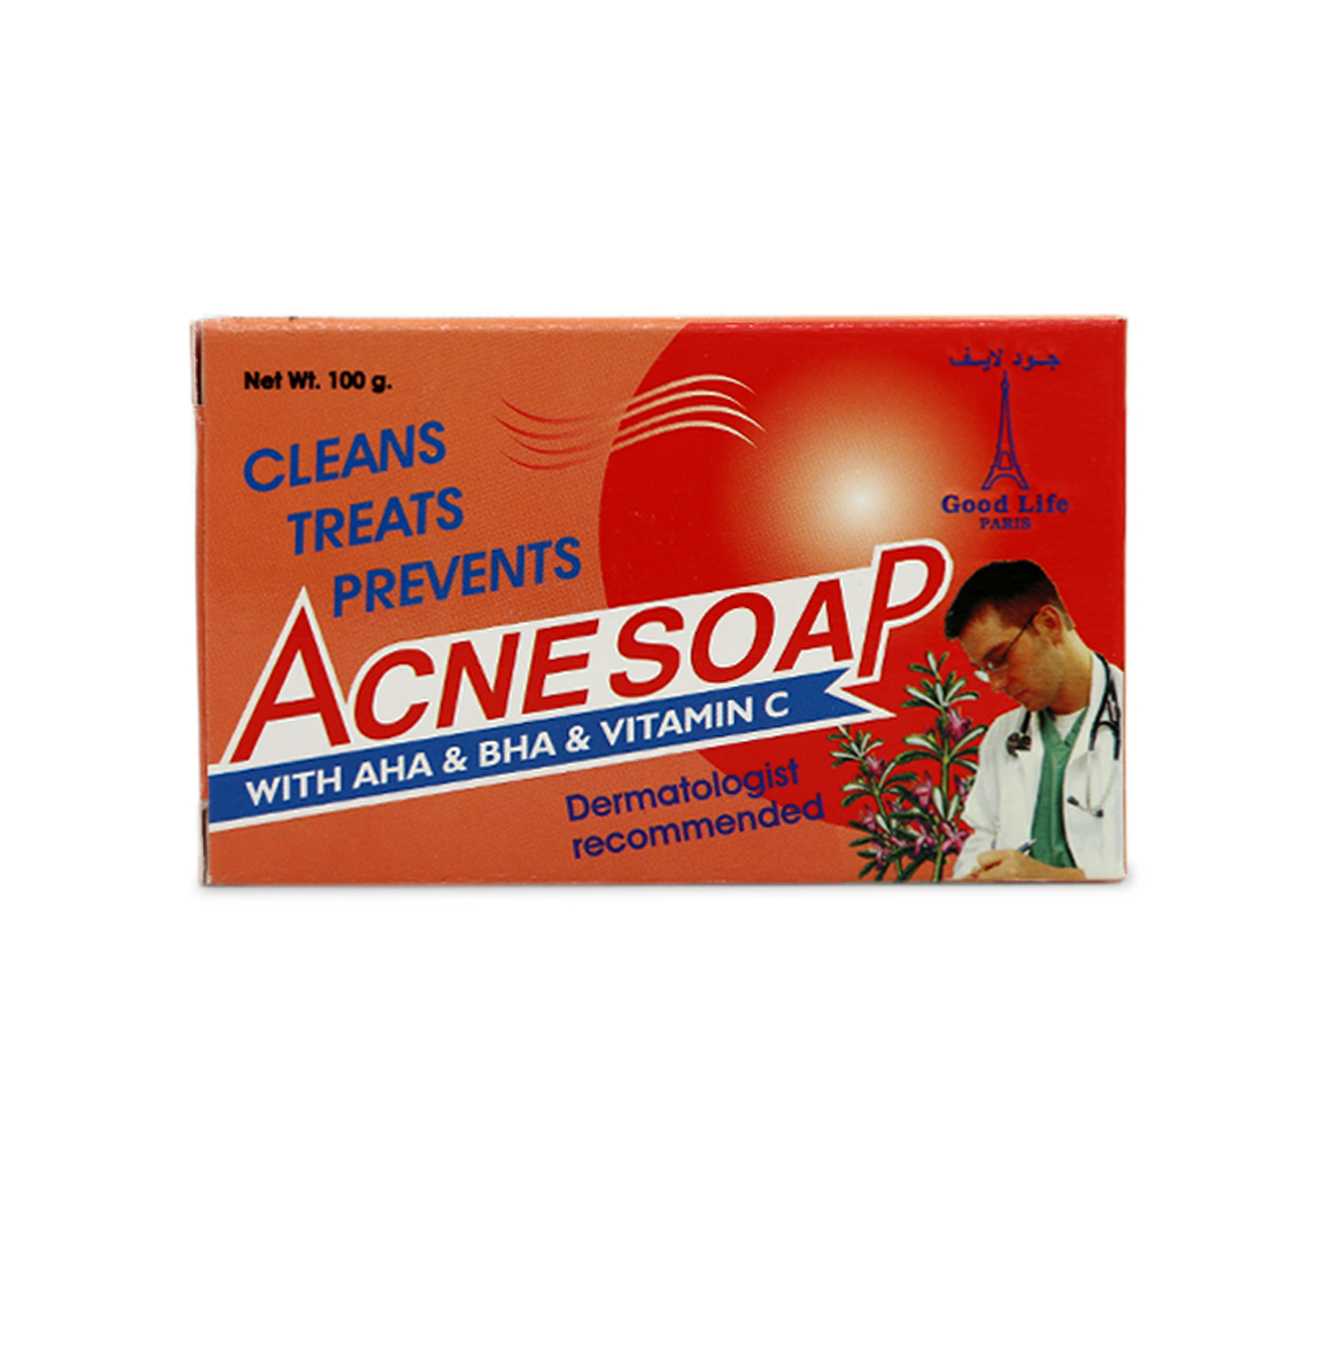 Good Life Acne Soap 100g